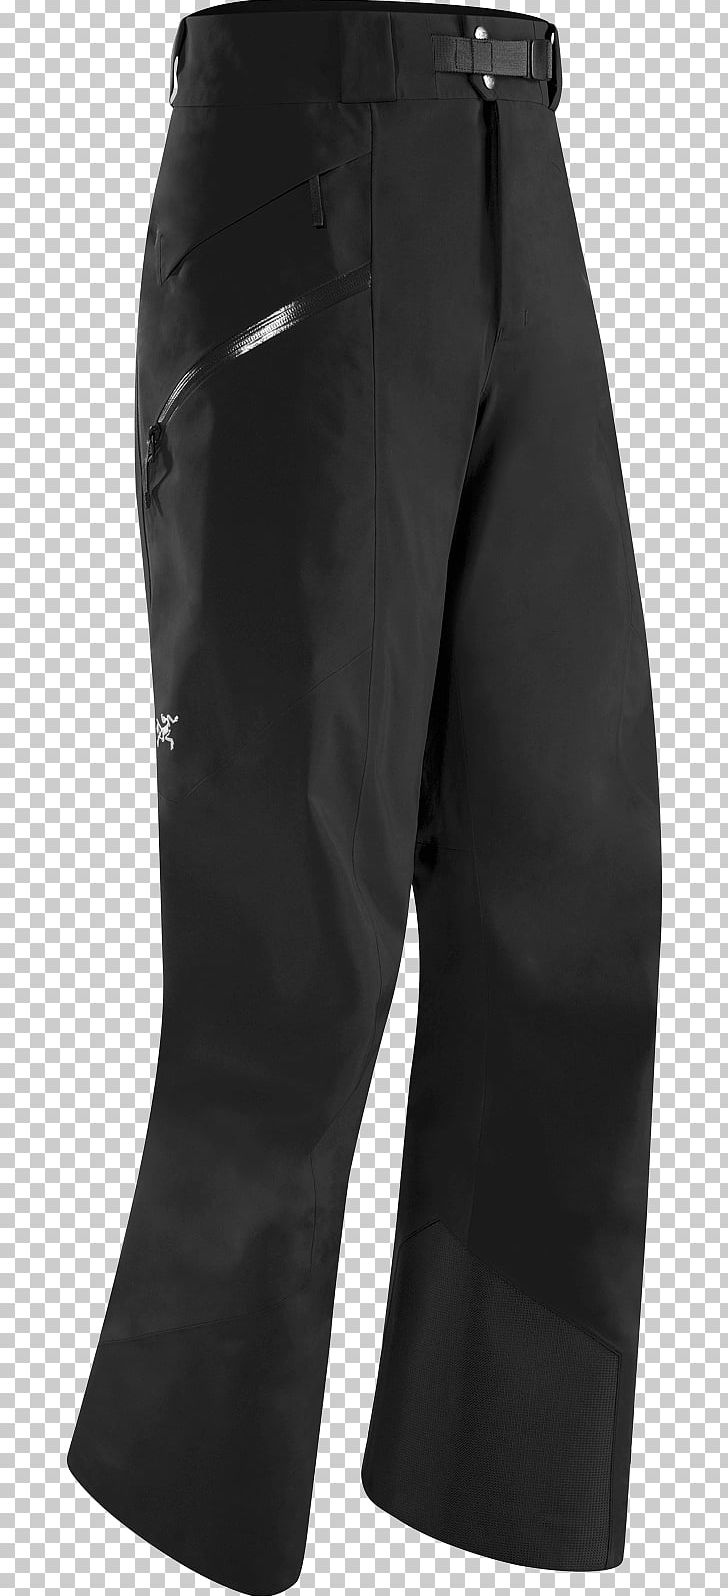 Pants Clothing Ski Suit Arc'teryx Salomon Group PNG, Clipart,  Free PNG Download